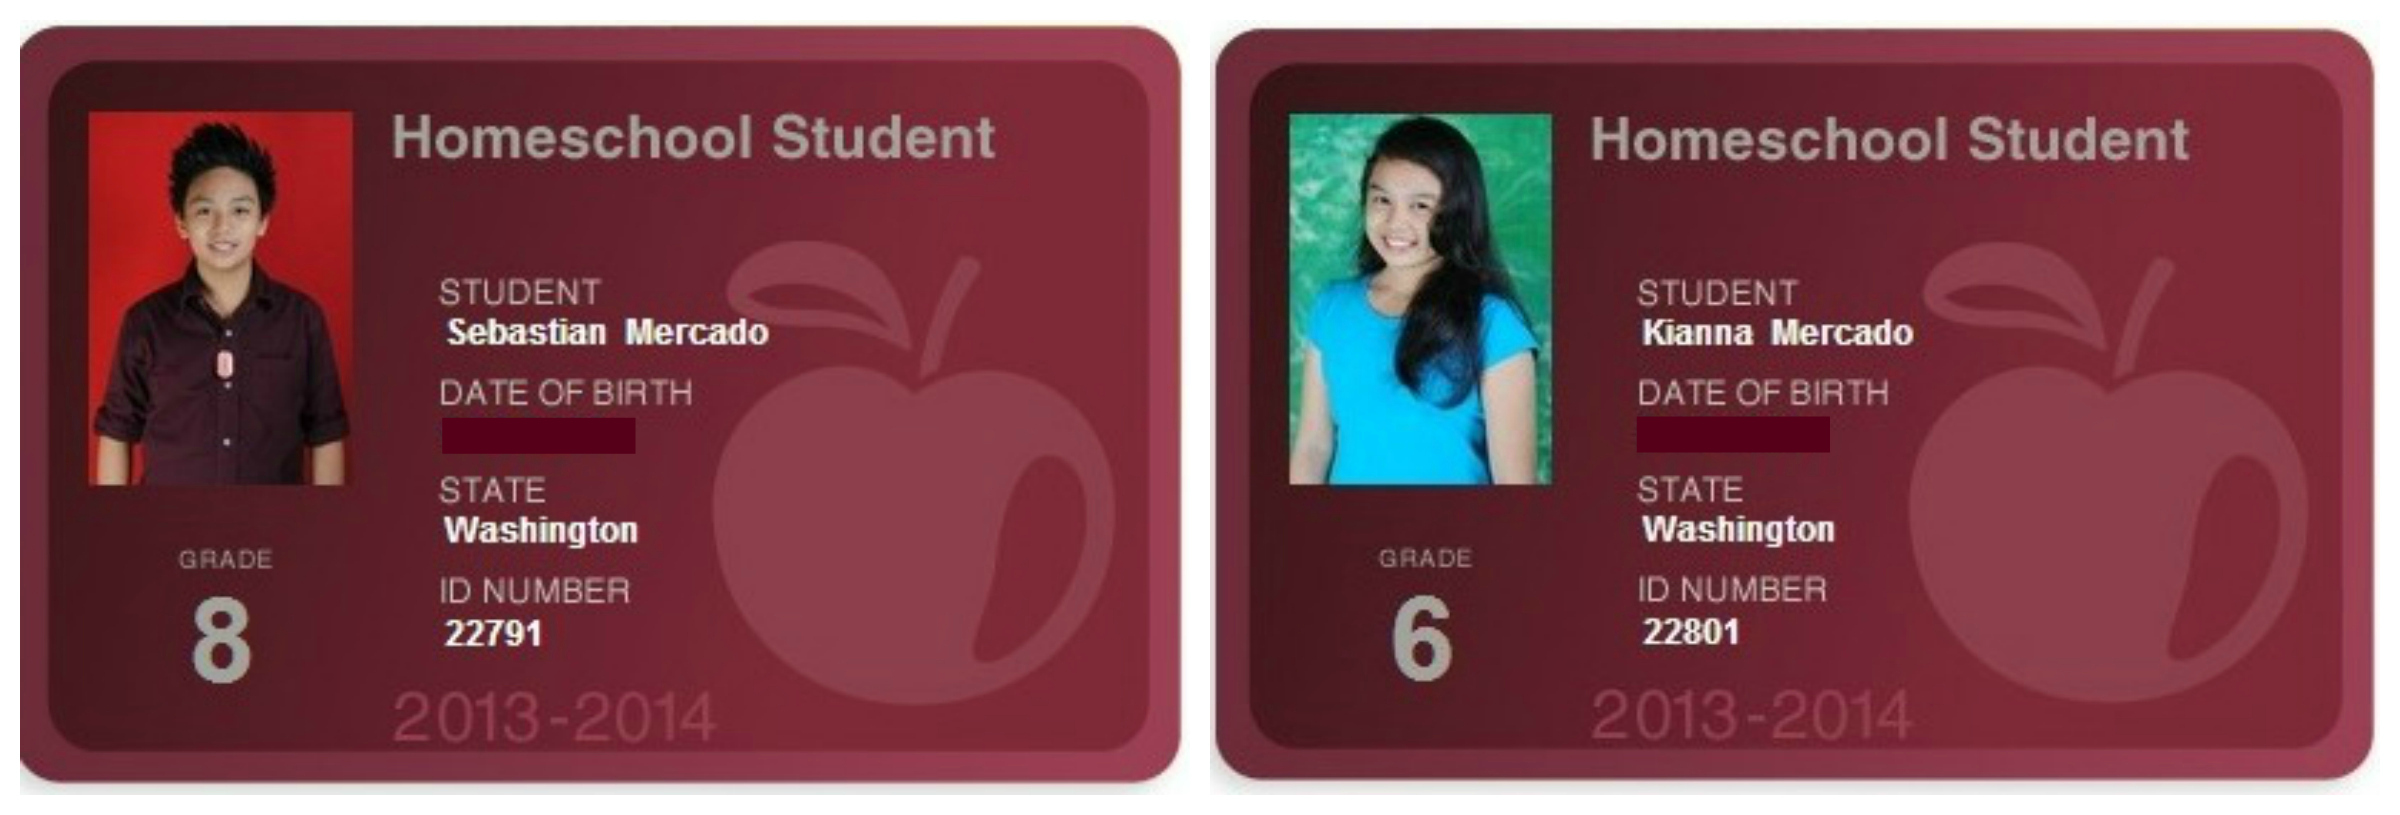 Homeschool ID Cards